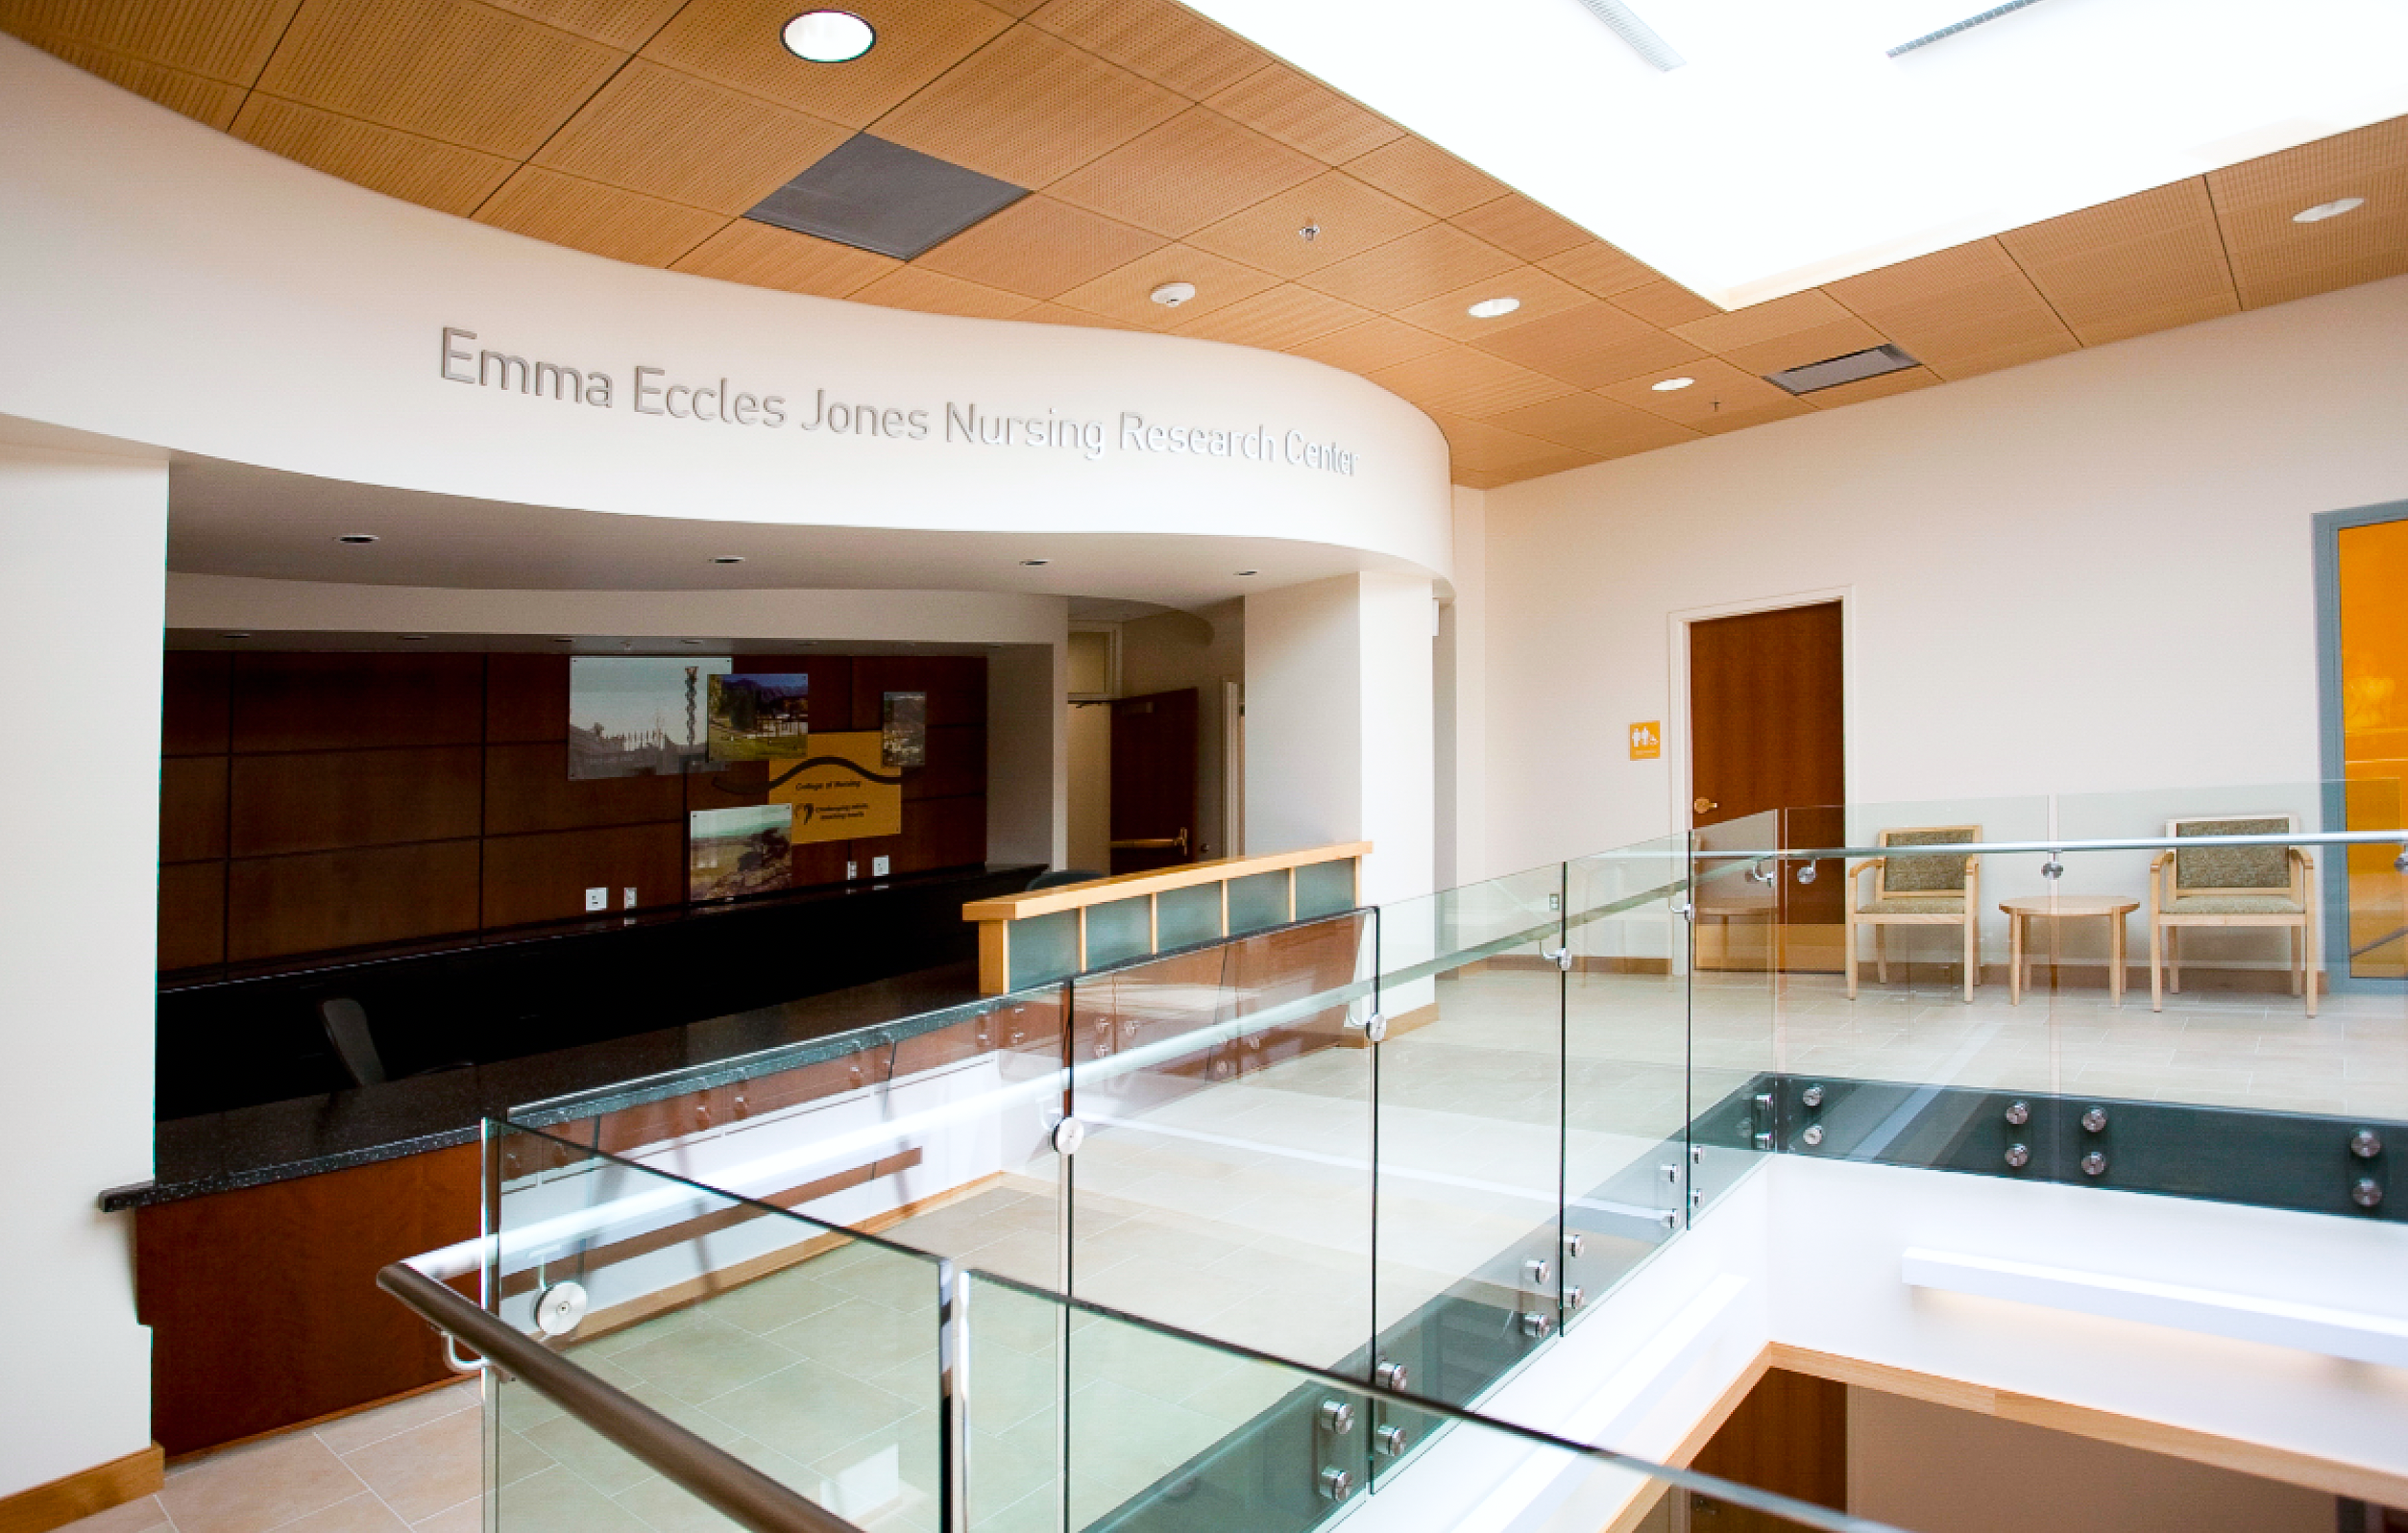 Emma Eccles Jones Nursing Research Center